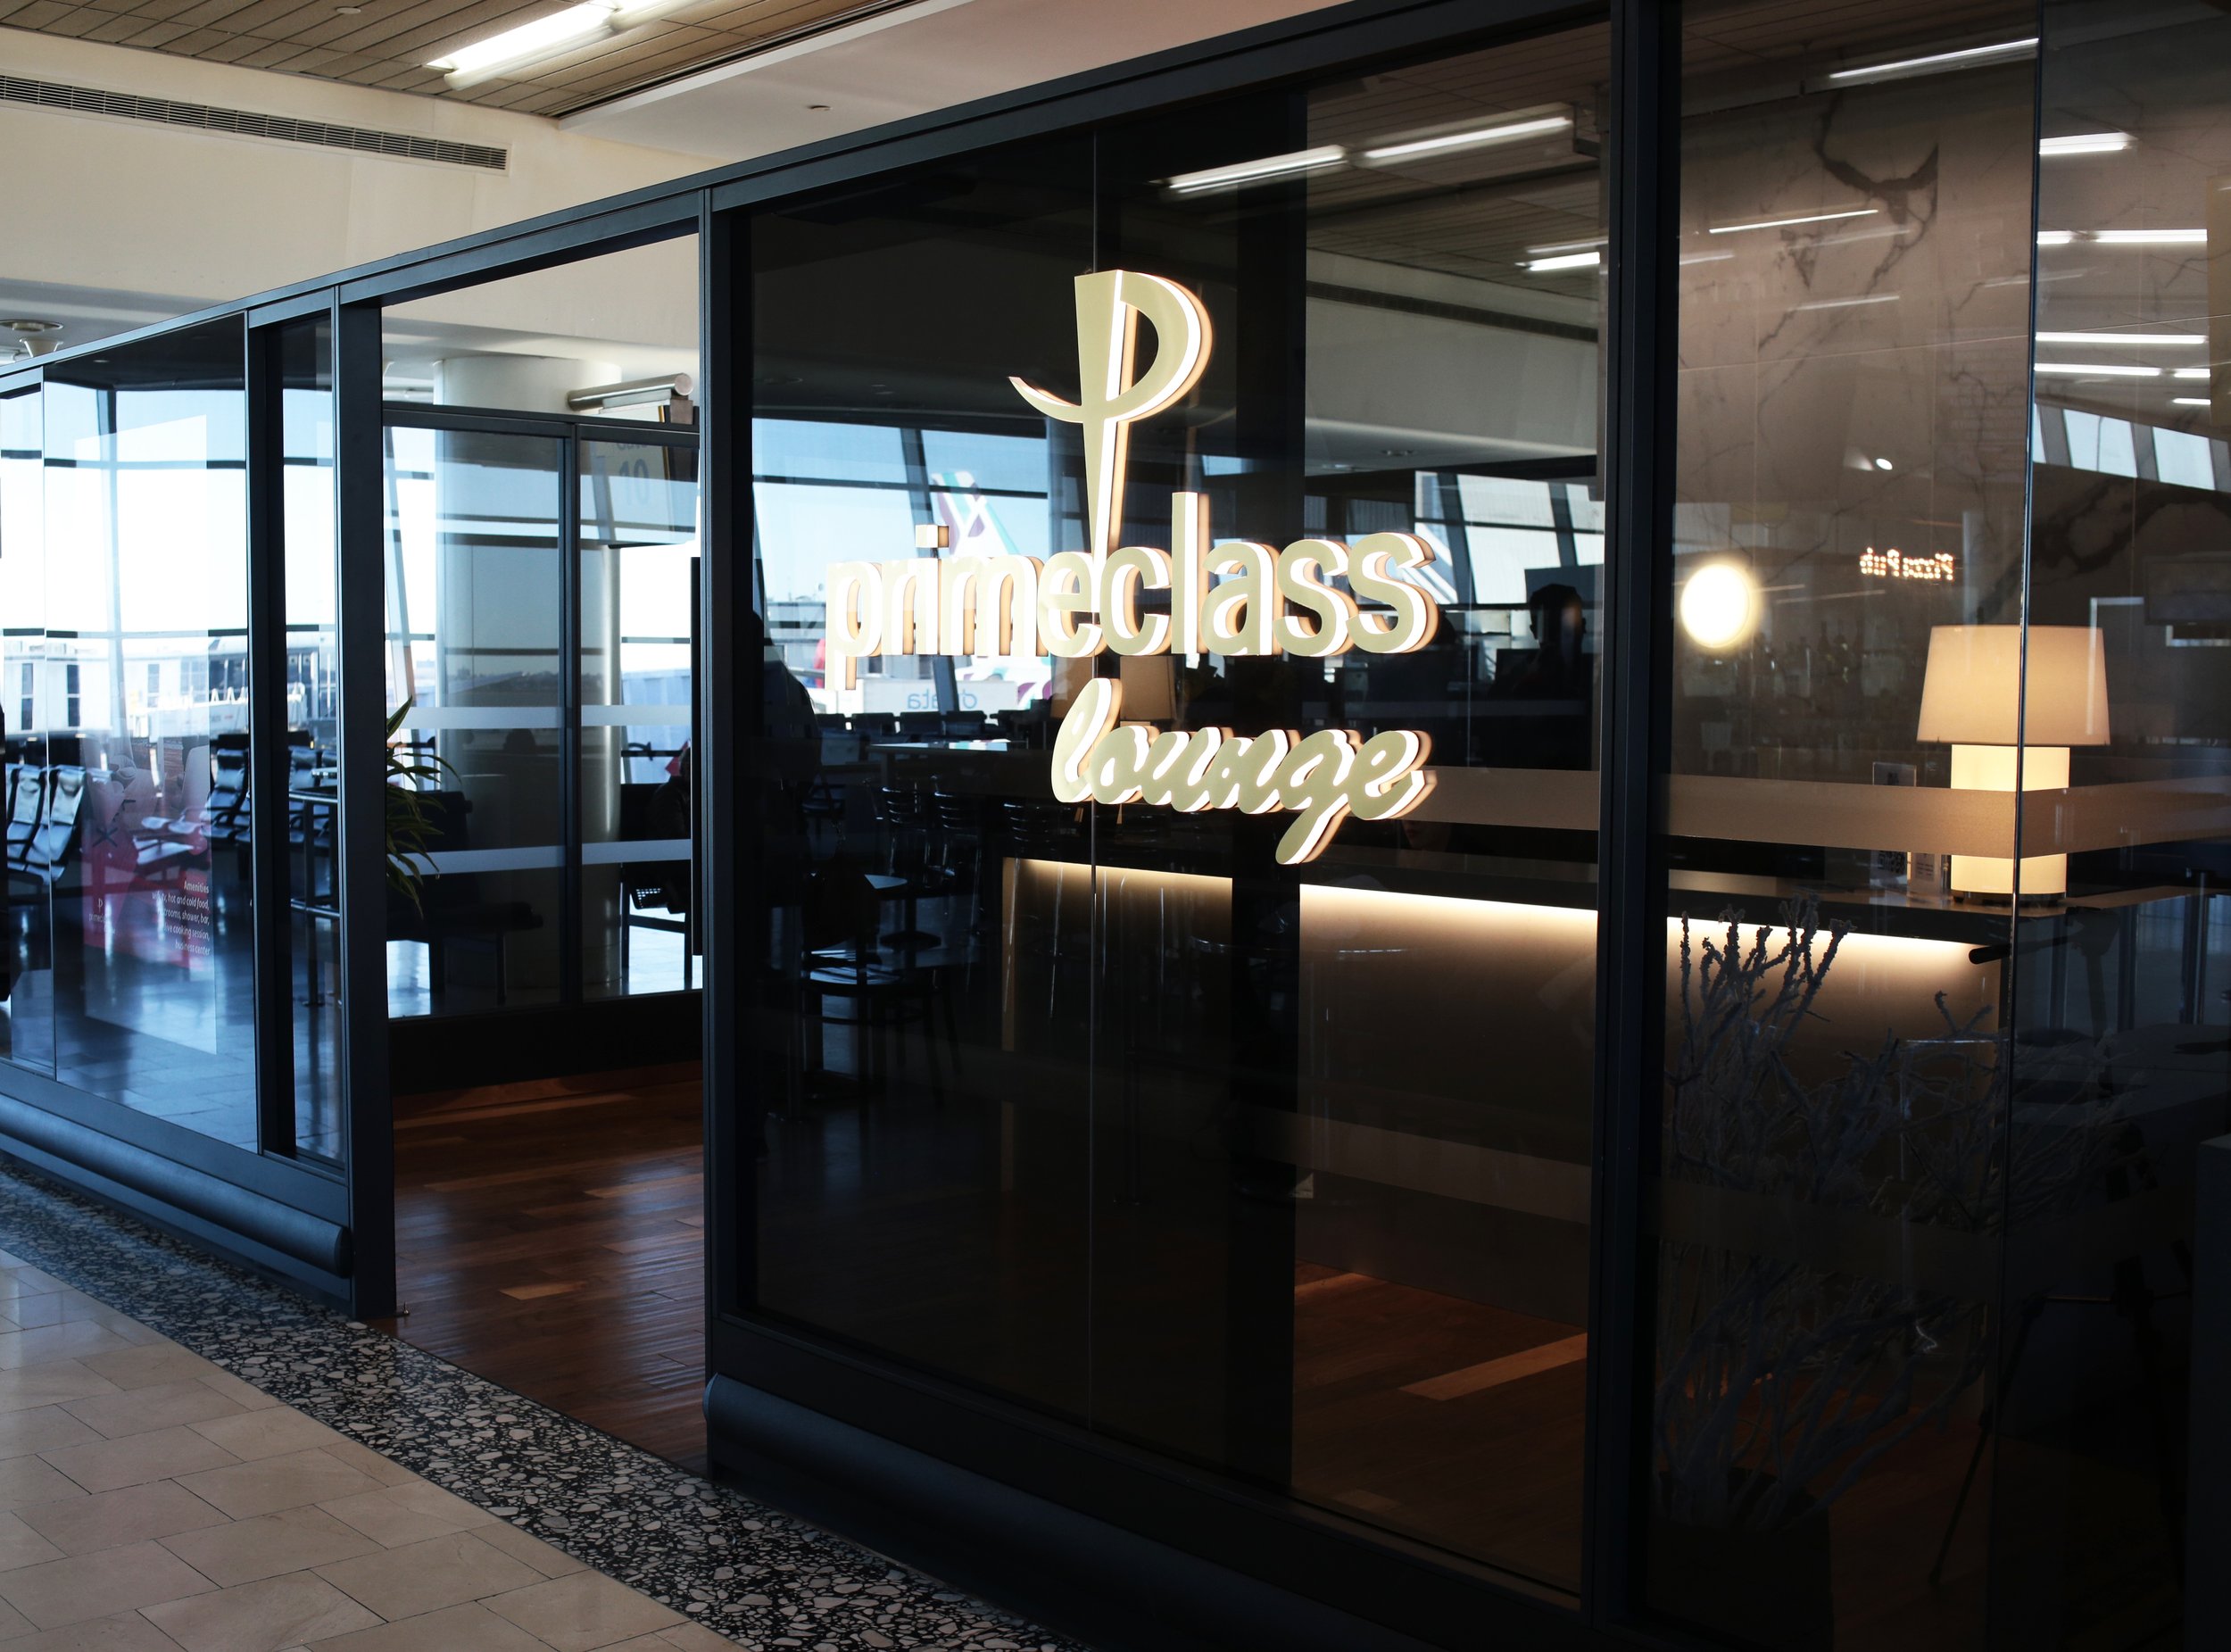 Primeclass Lounge Entrance Signage